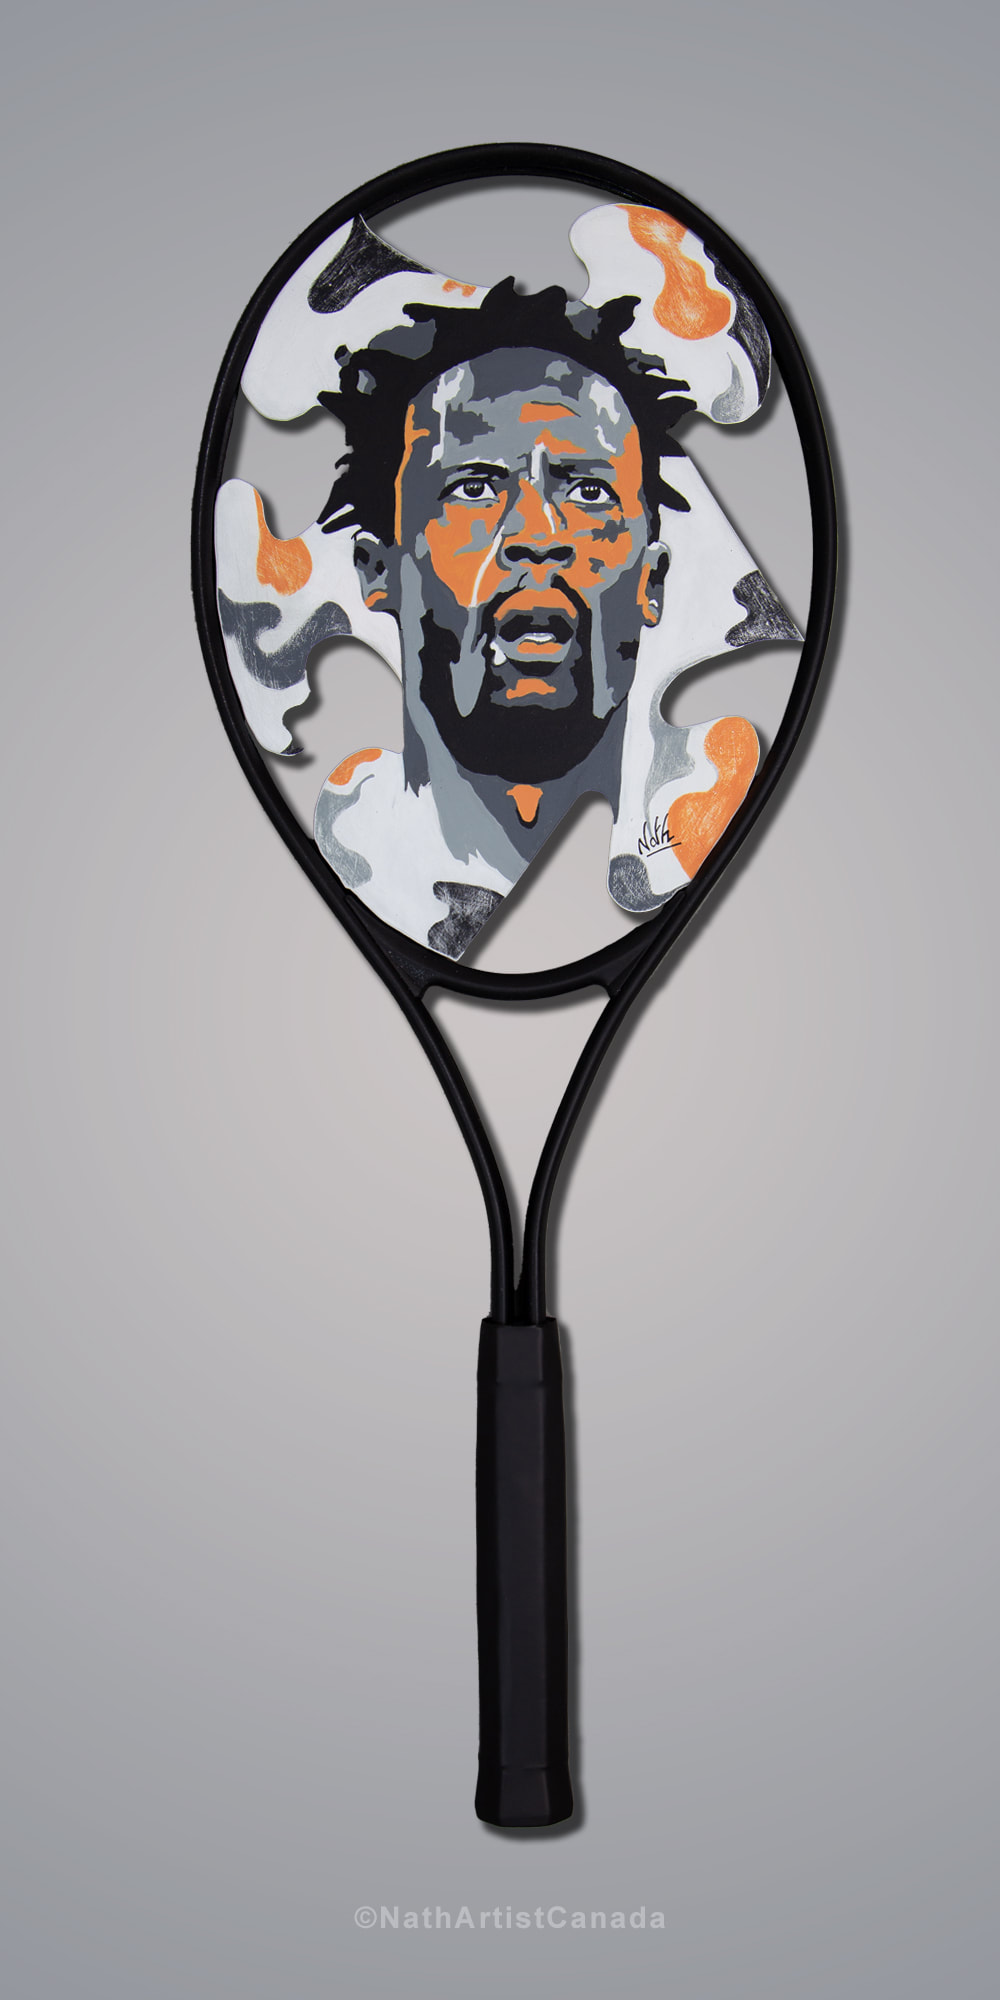 Gael Monfils tennis portrait